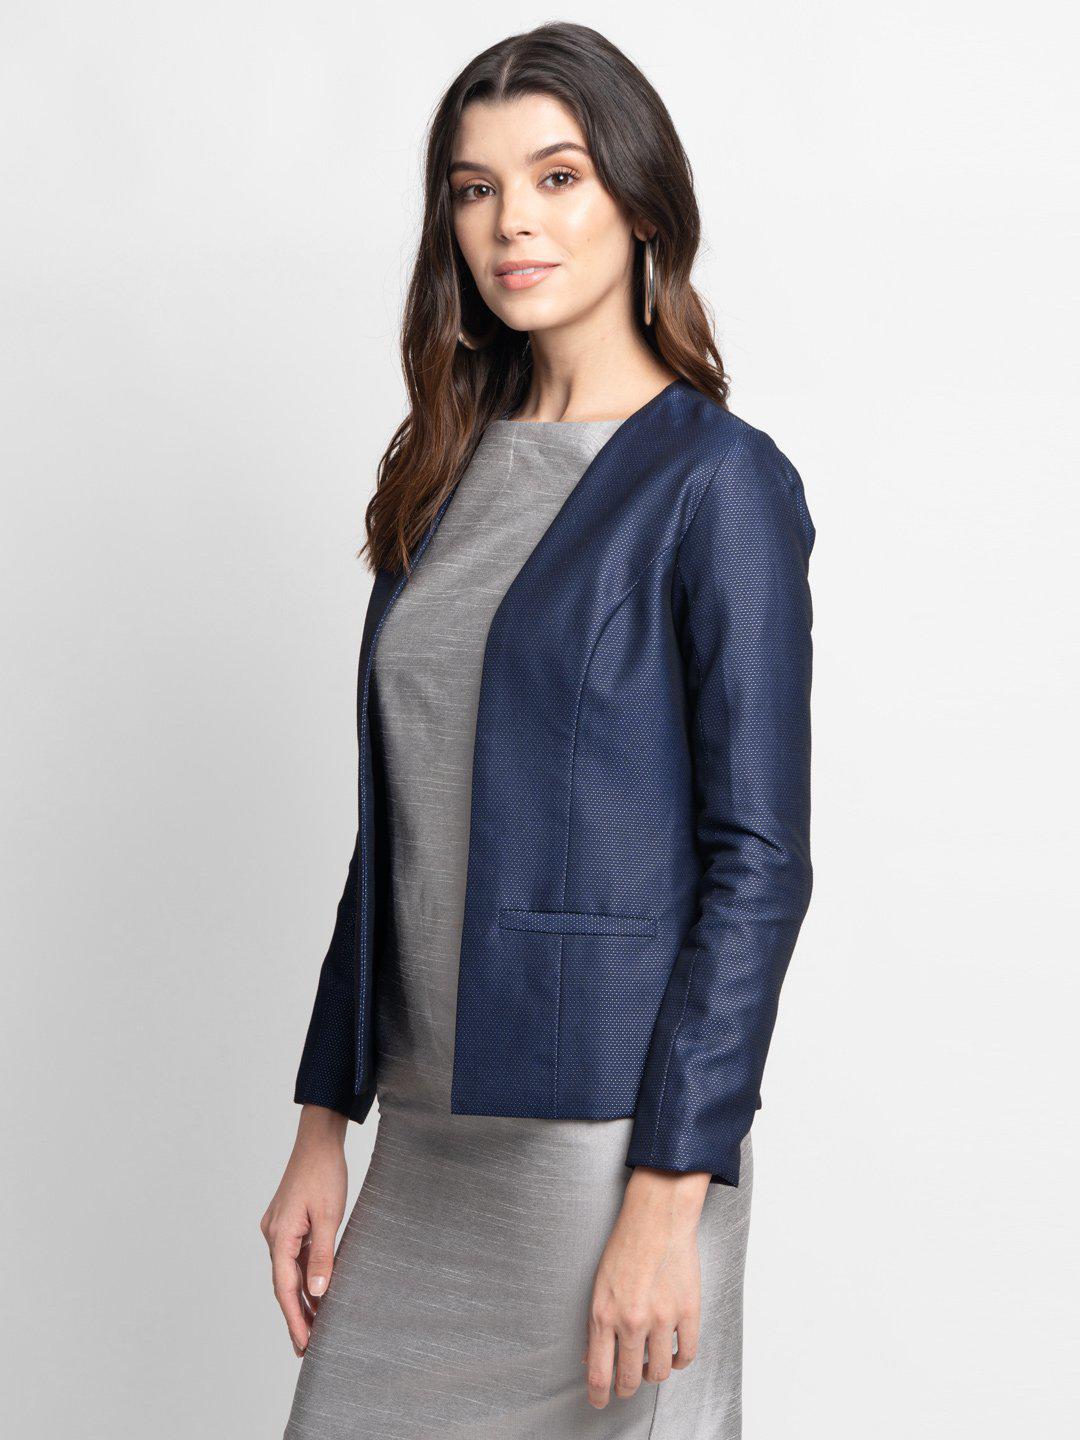 Blue swiss dot evening jacket with grey dupioni sheath dress